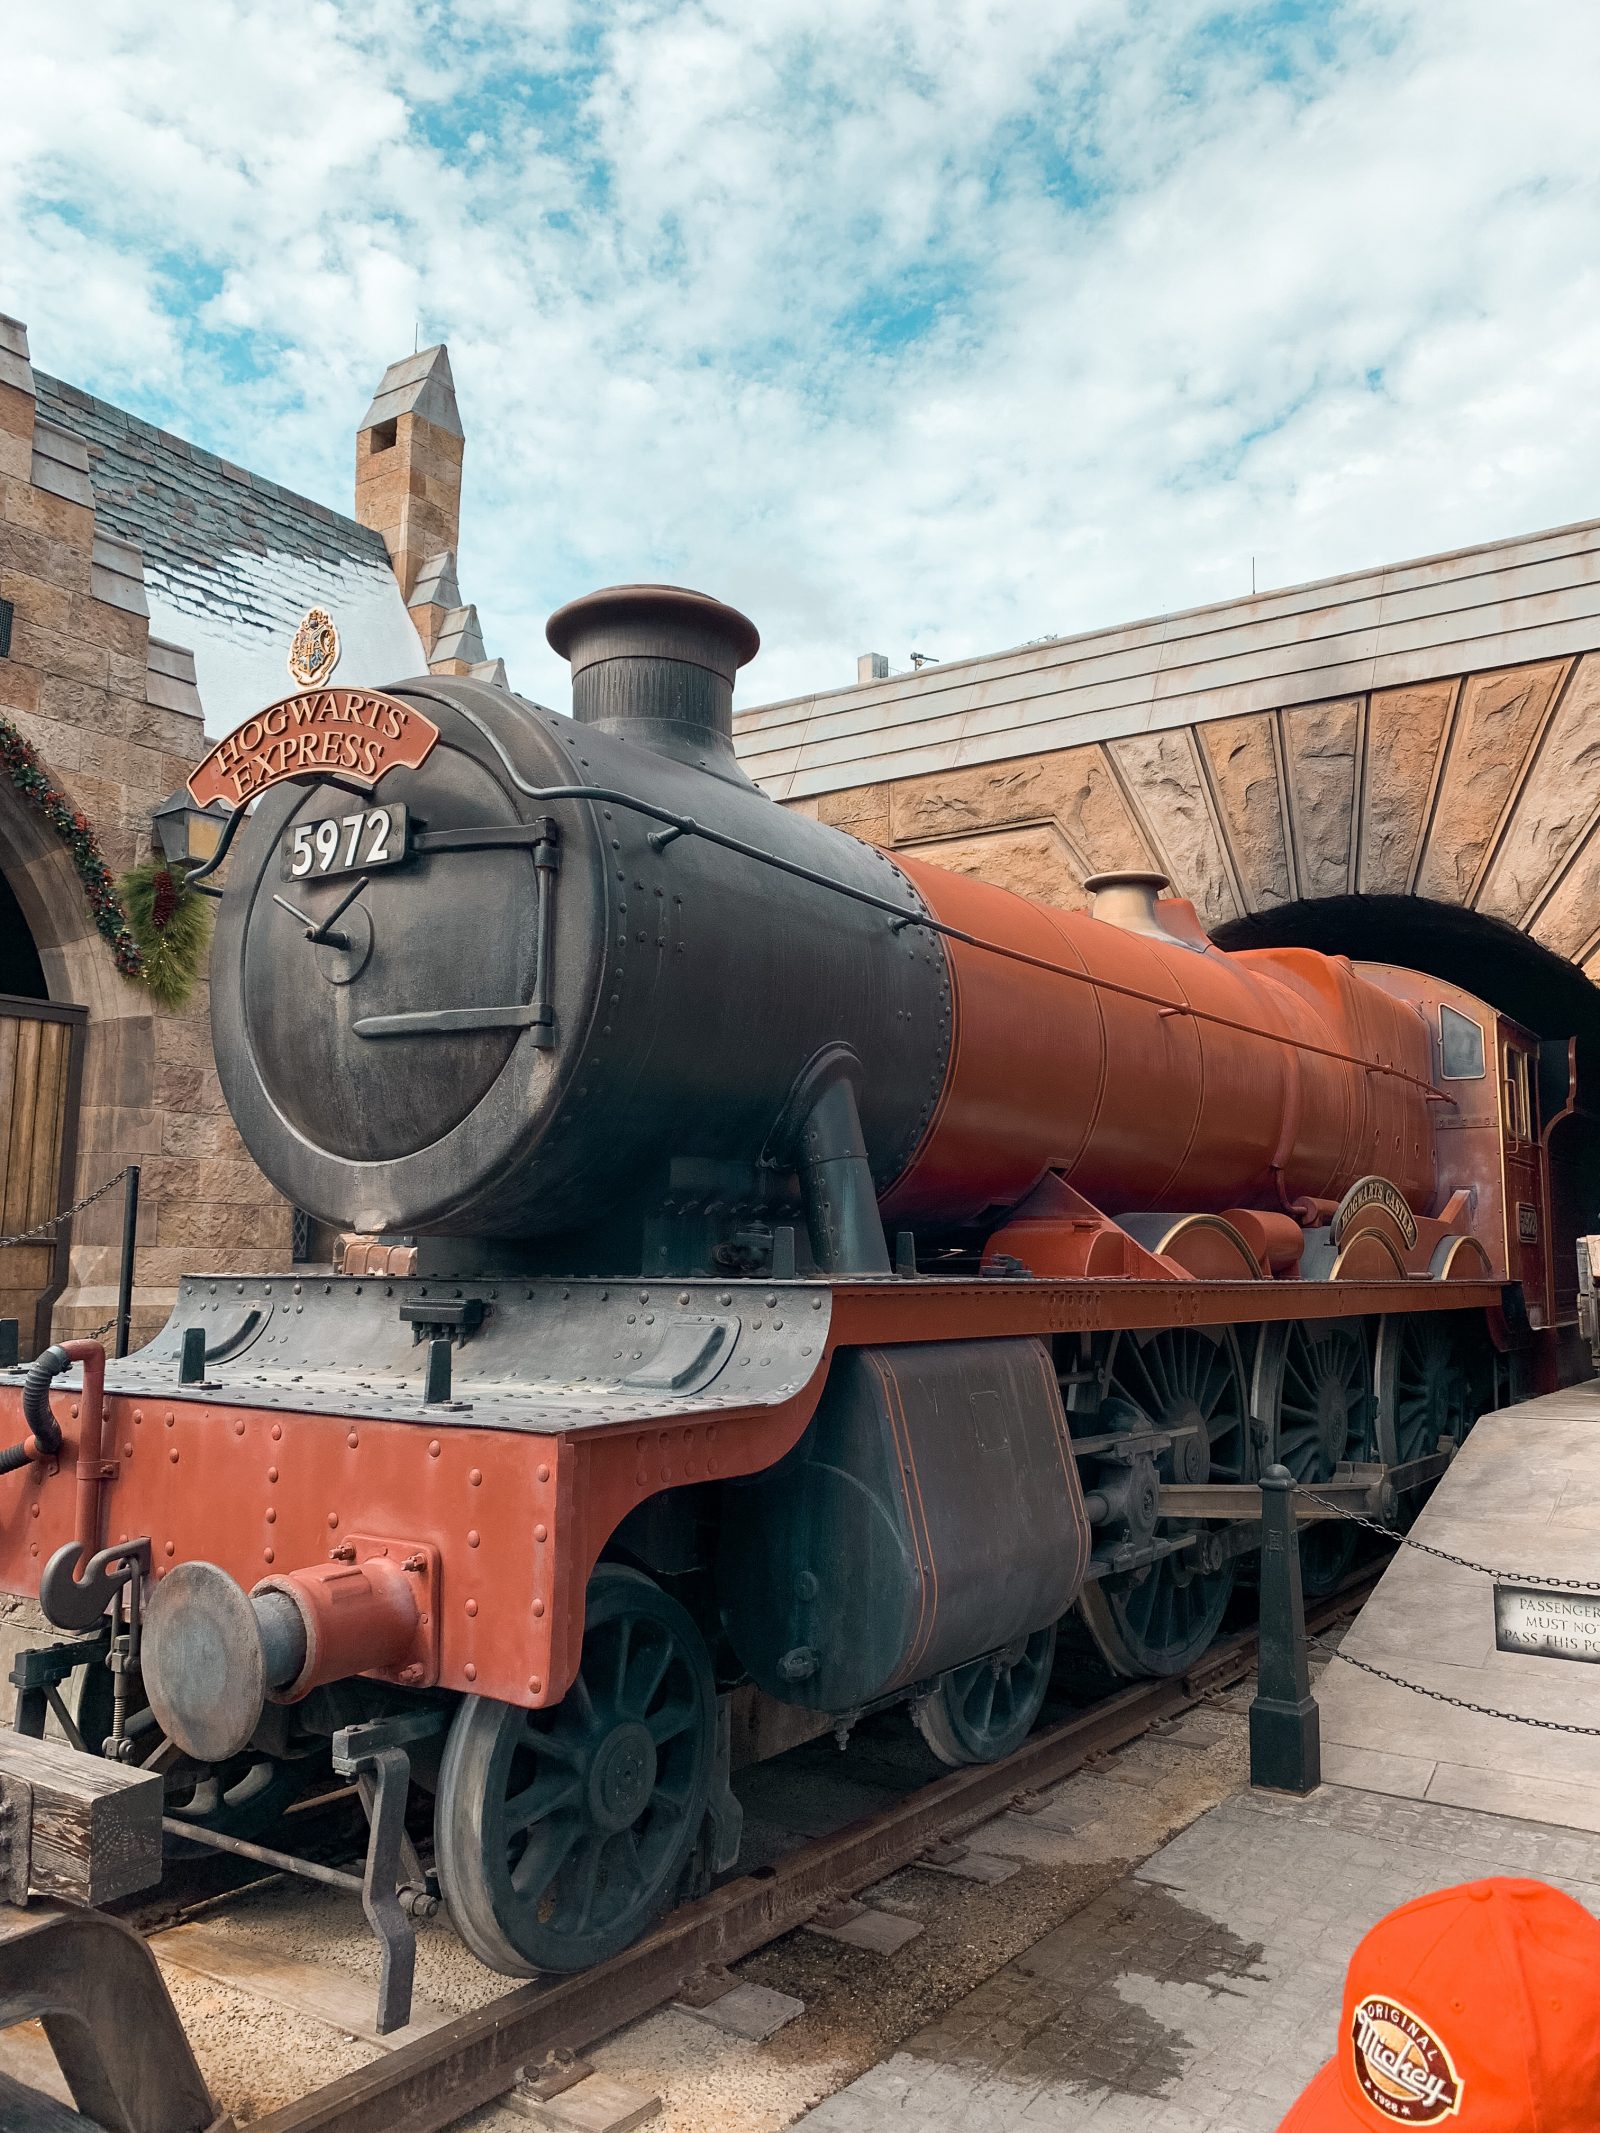 The Hogwarts Express at Universal Studios Orlando